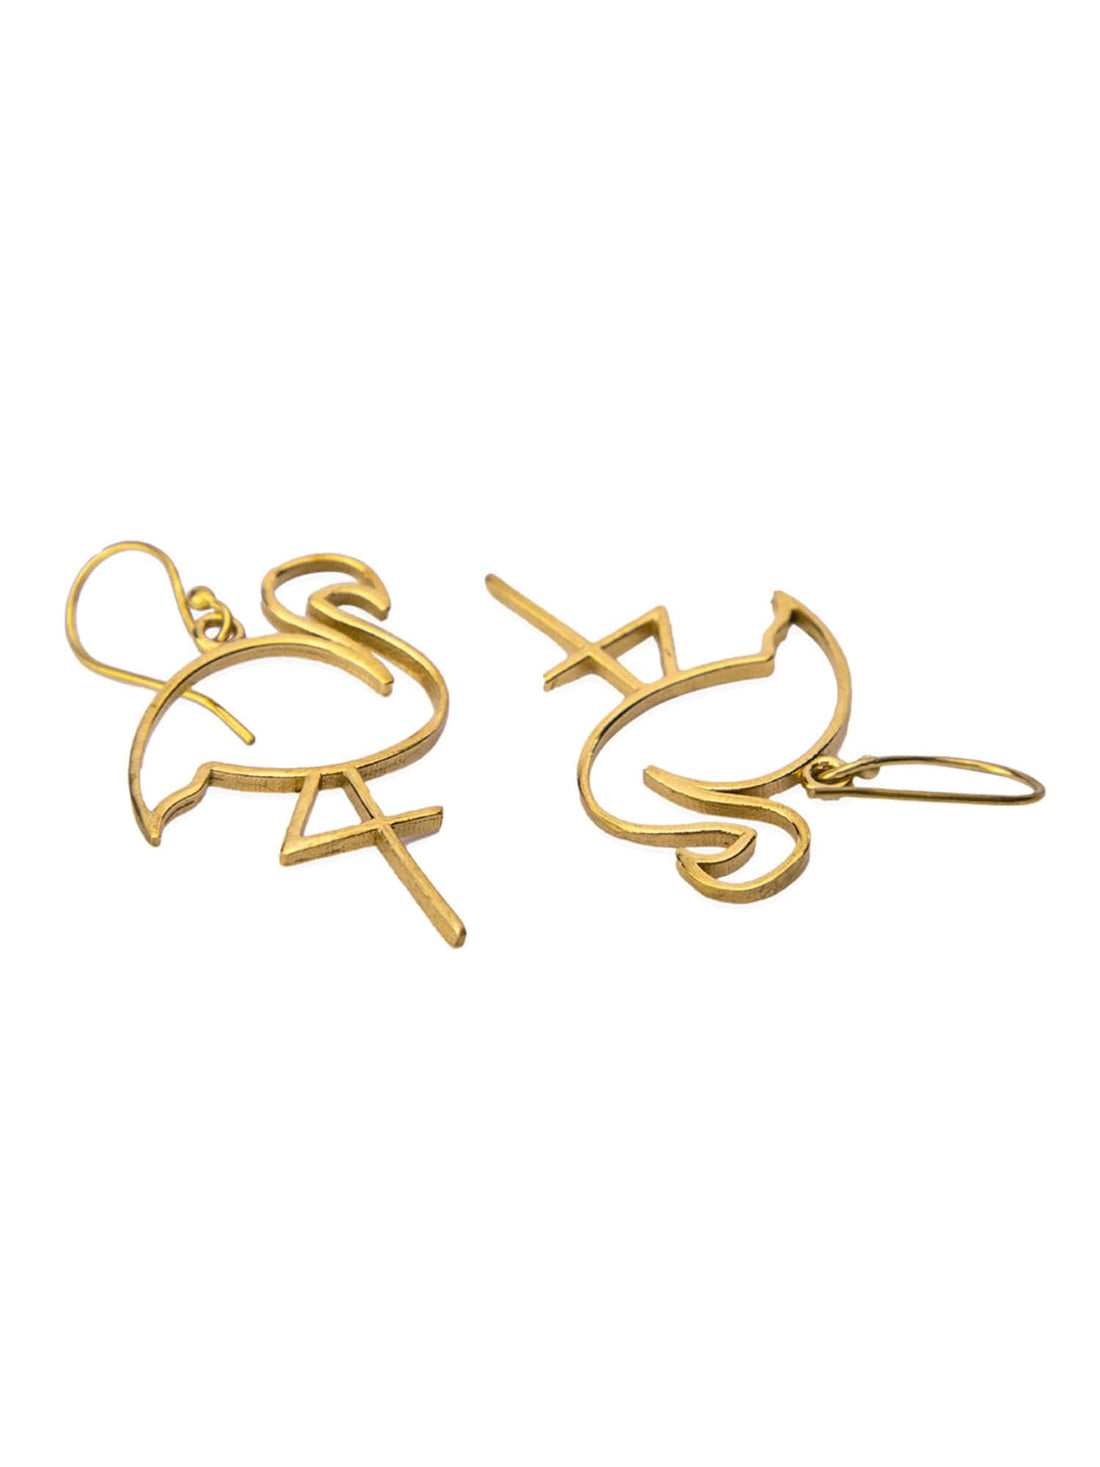 Party Wear Drops and Danglers Earrings - Western Gold-Plated Brass Earrings By Studio One Love